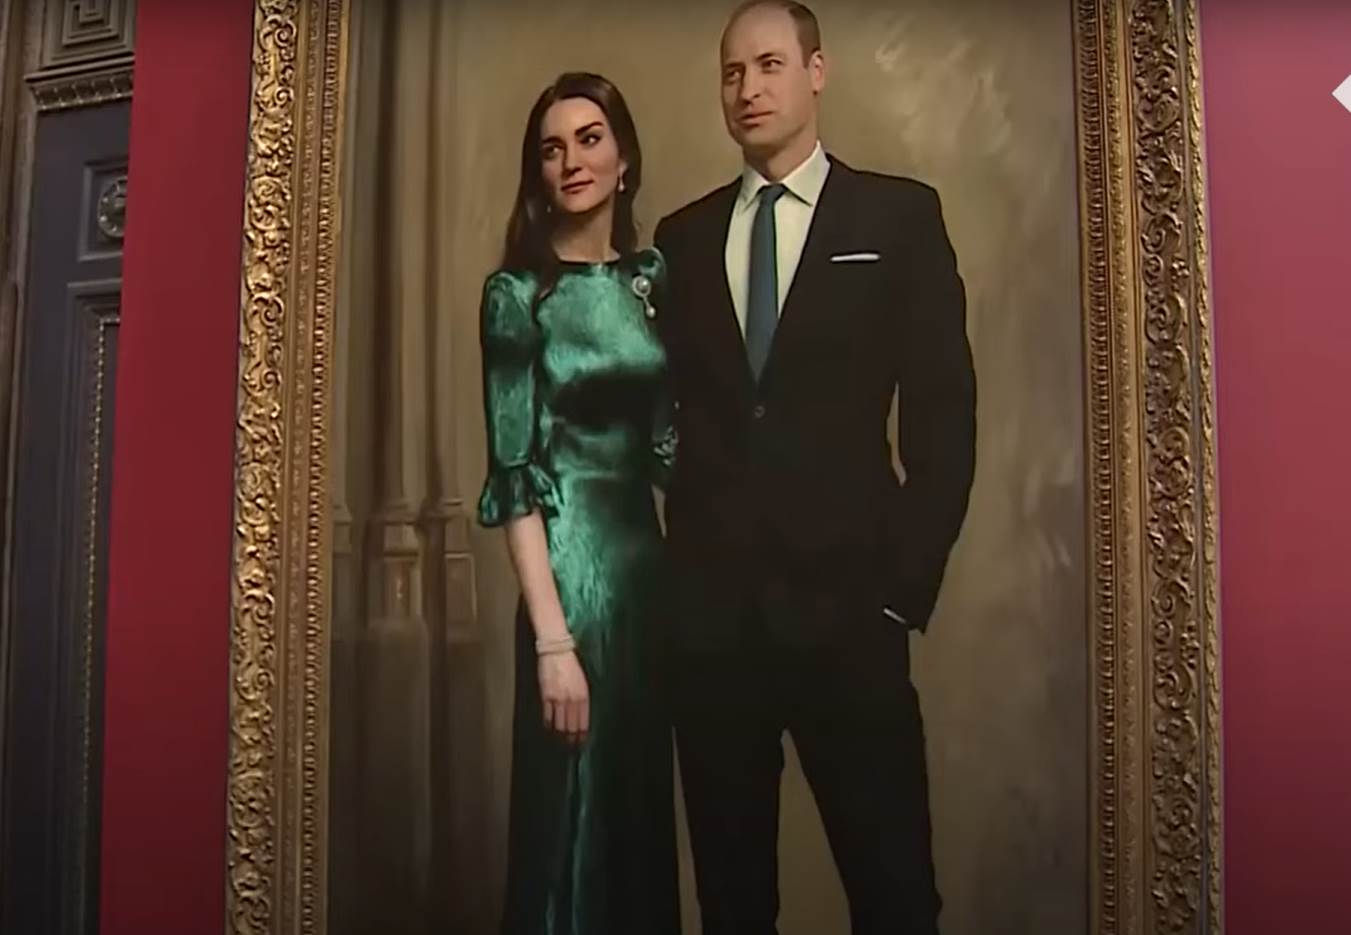  Haos zbog portreta princa Vilijama i Kejt Midlton 